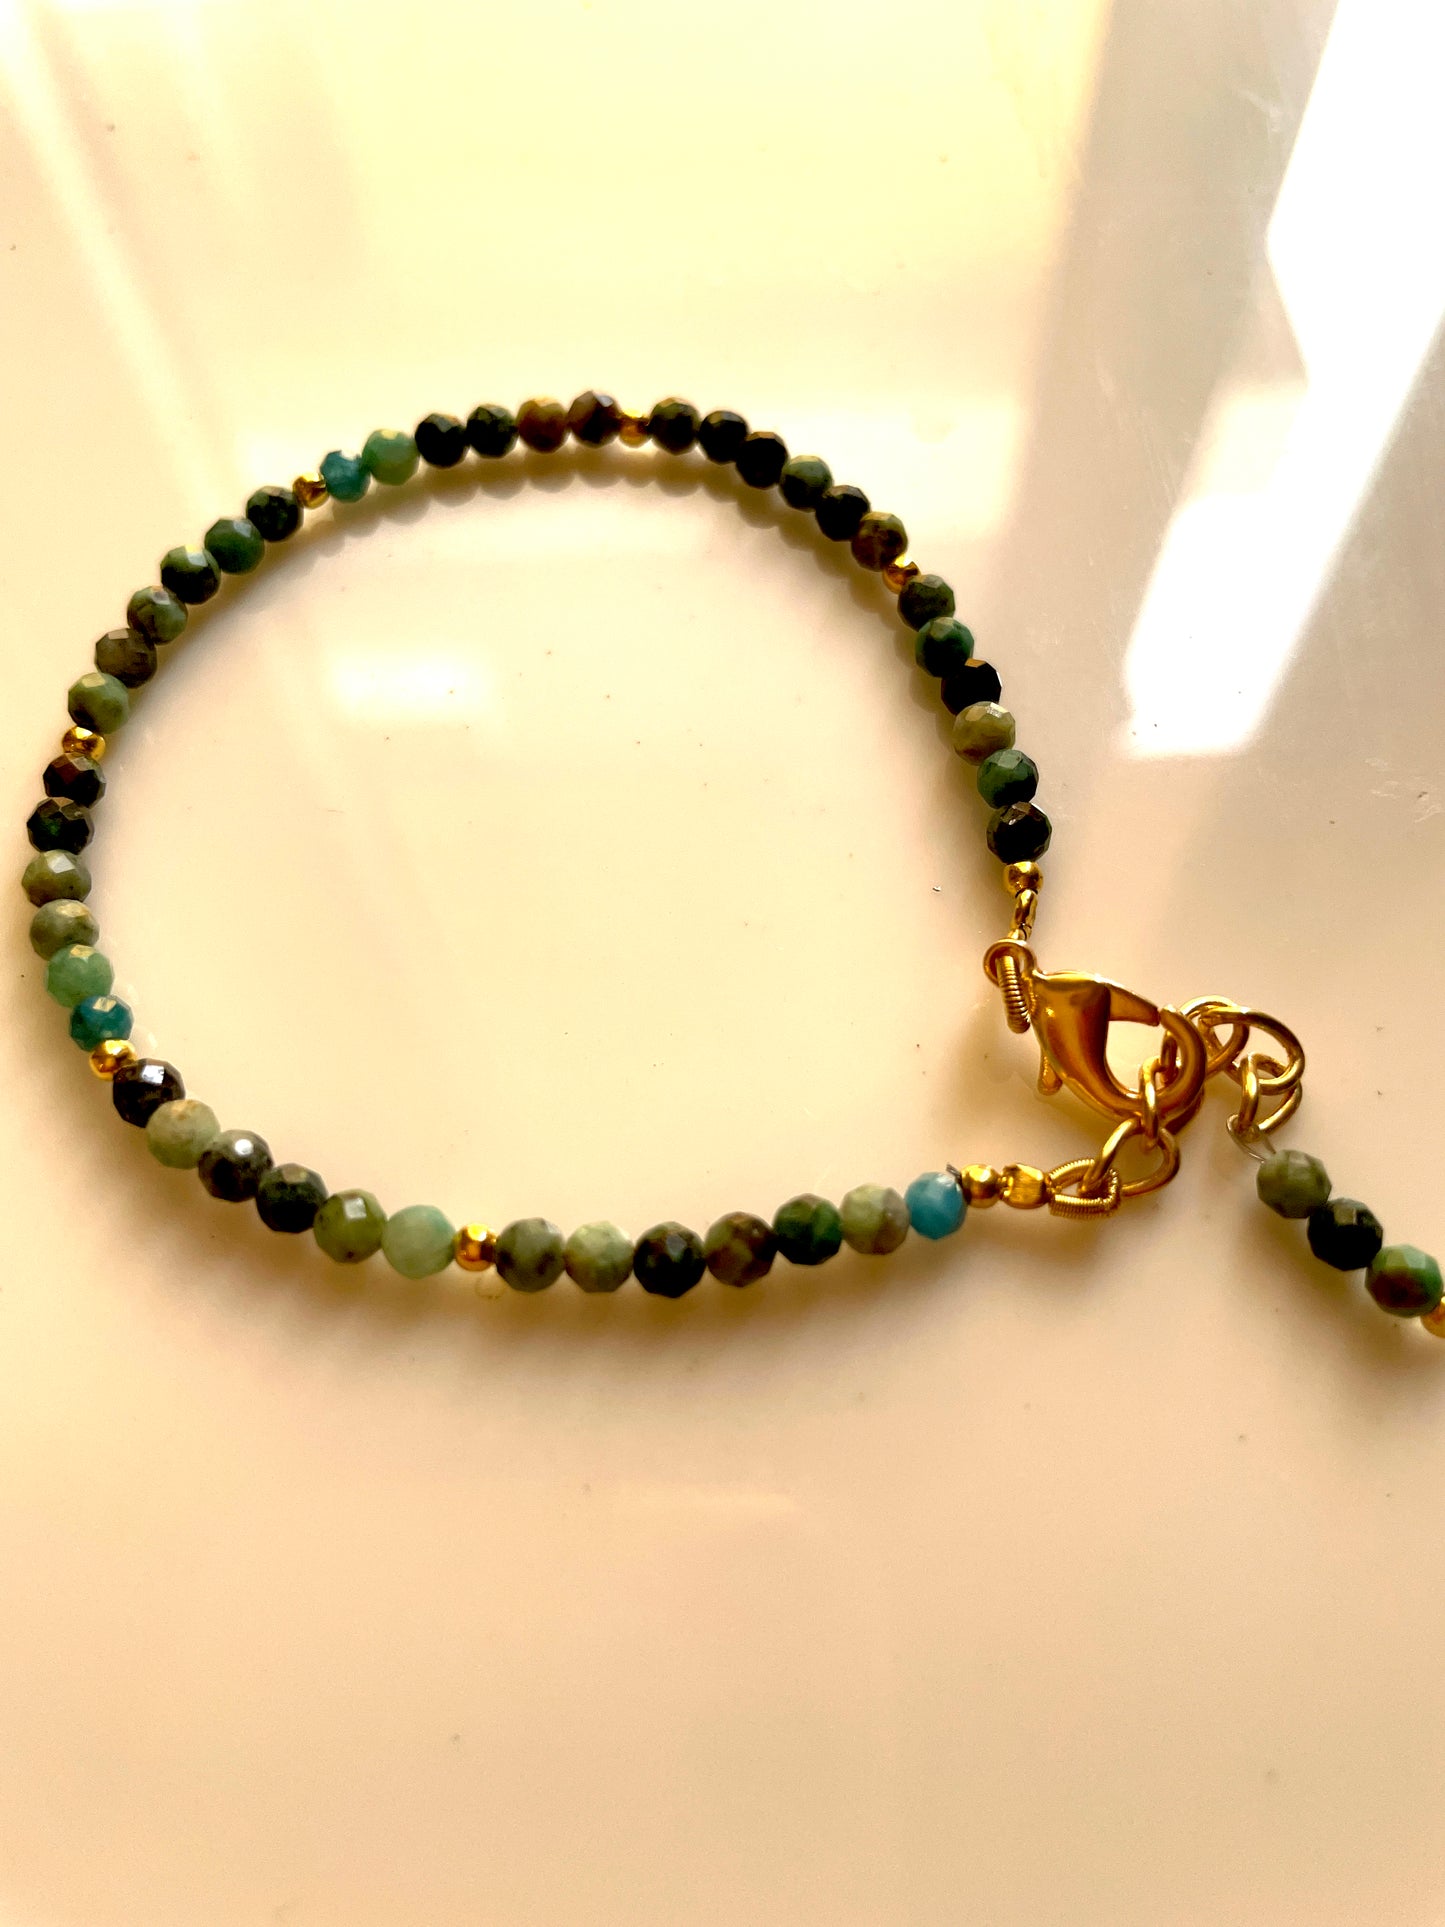 Gold polished beads Turquoise